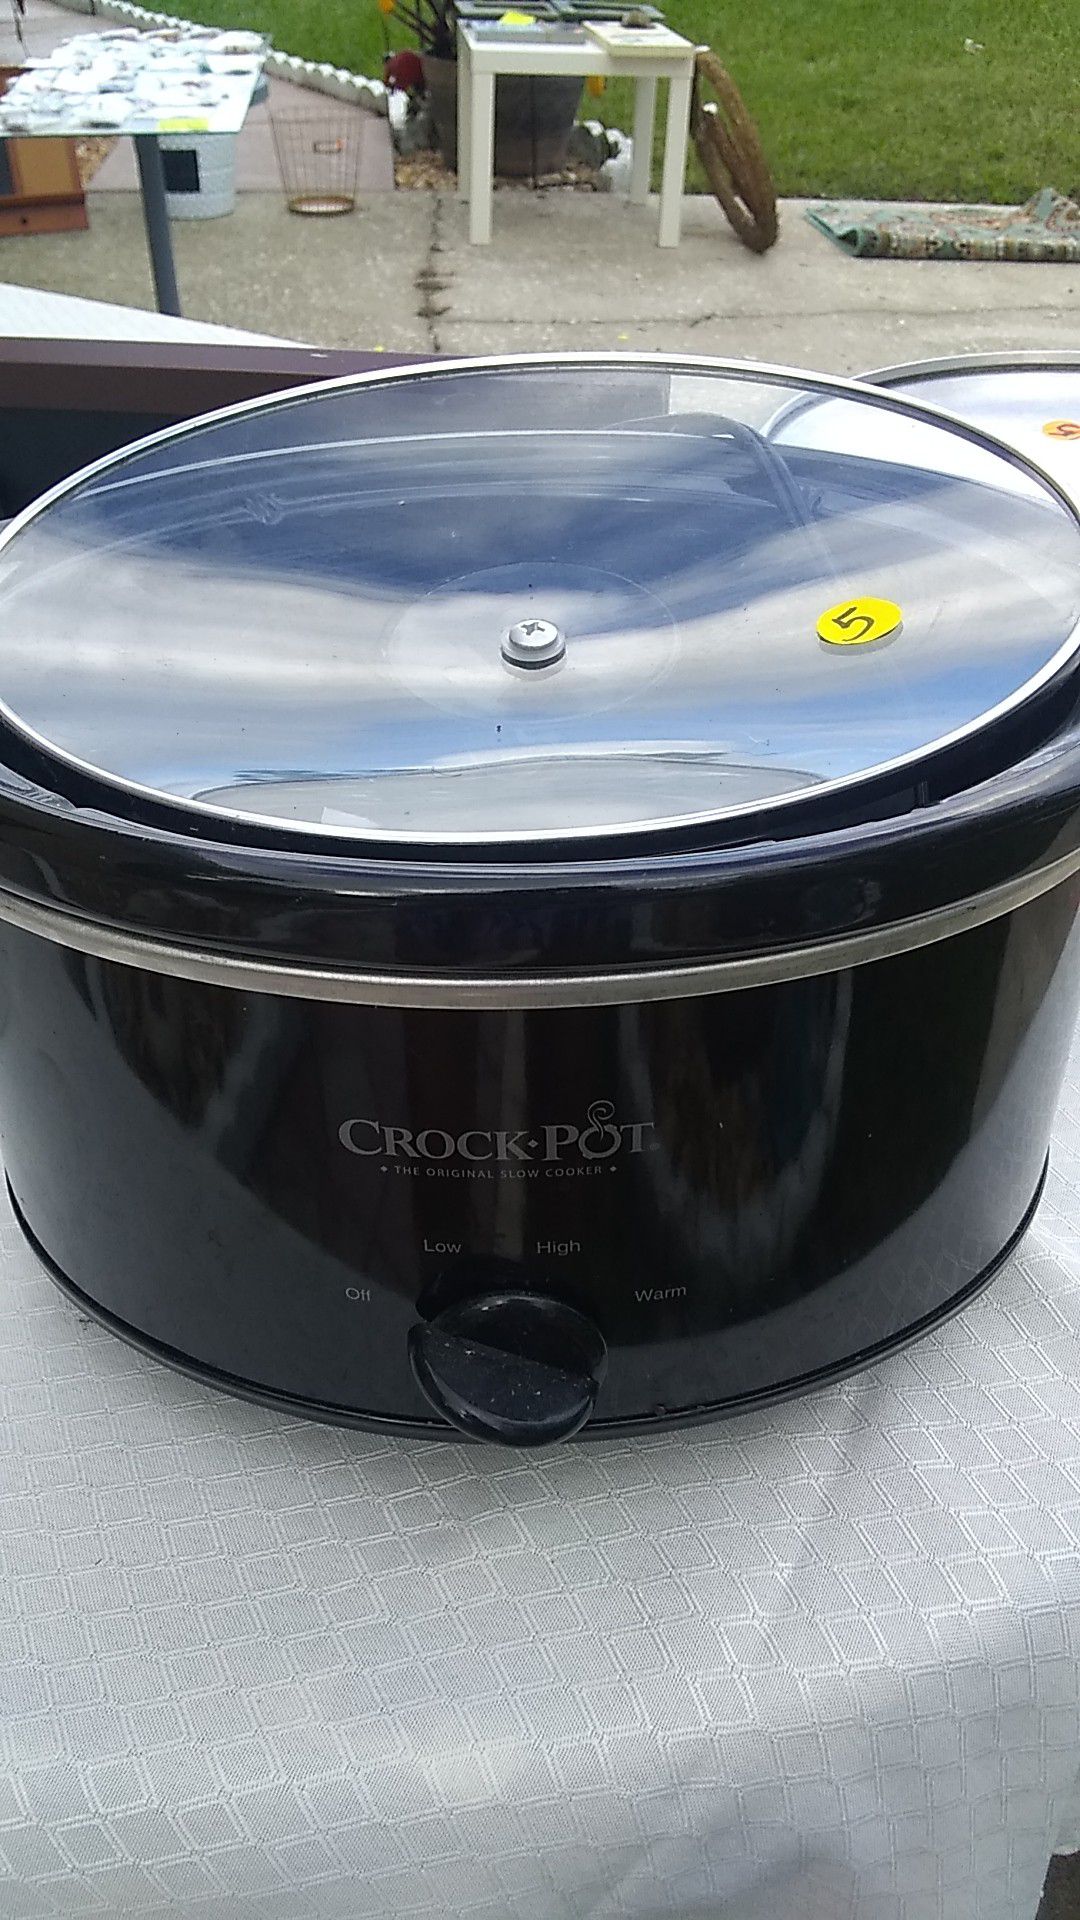 Crock pot /slow cooker